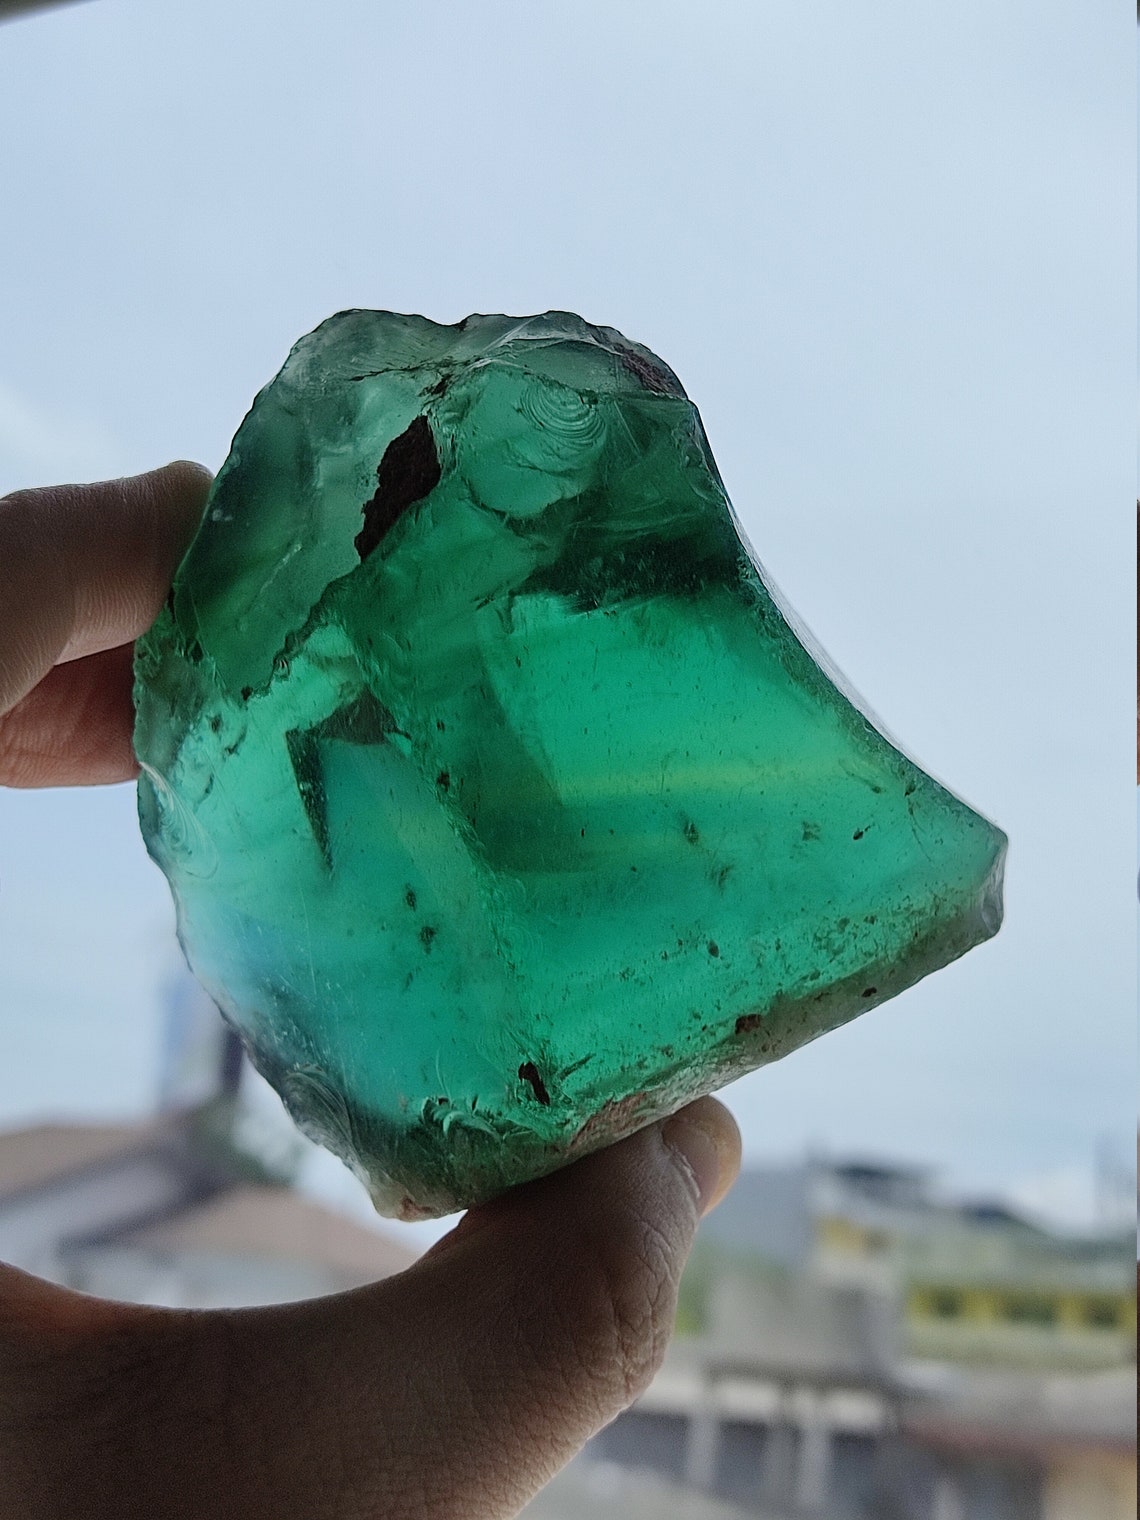 Green Obsidian Volcanic Glass Amazing Emerald Green | Etsy